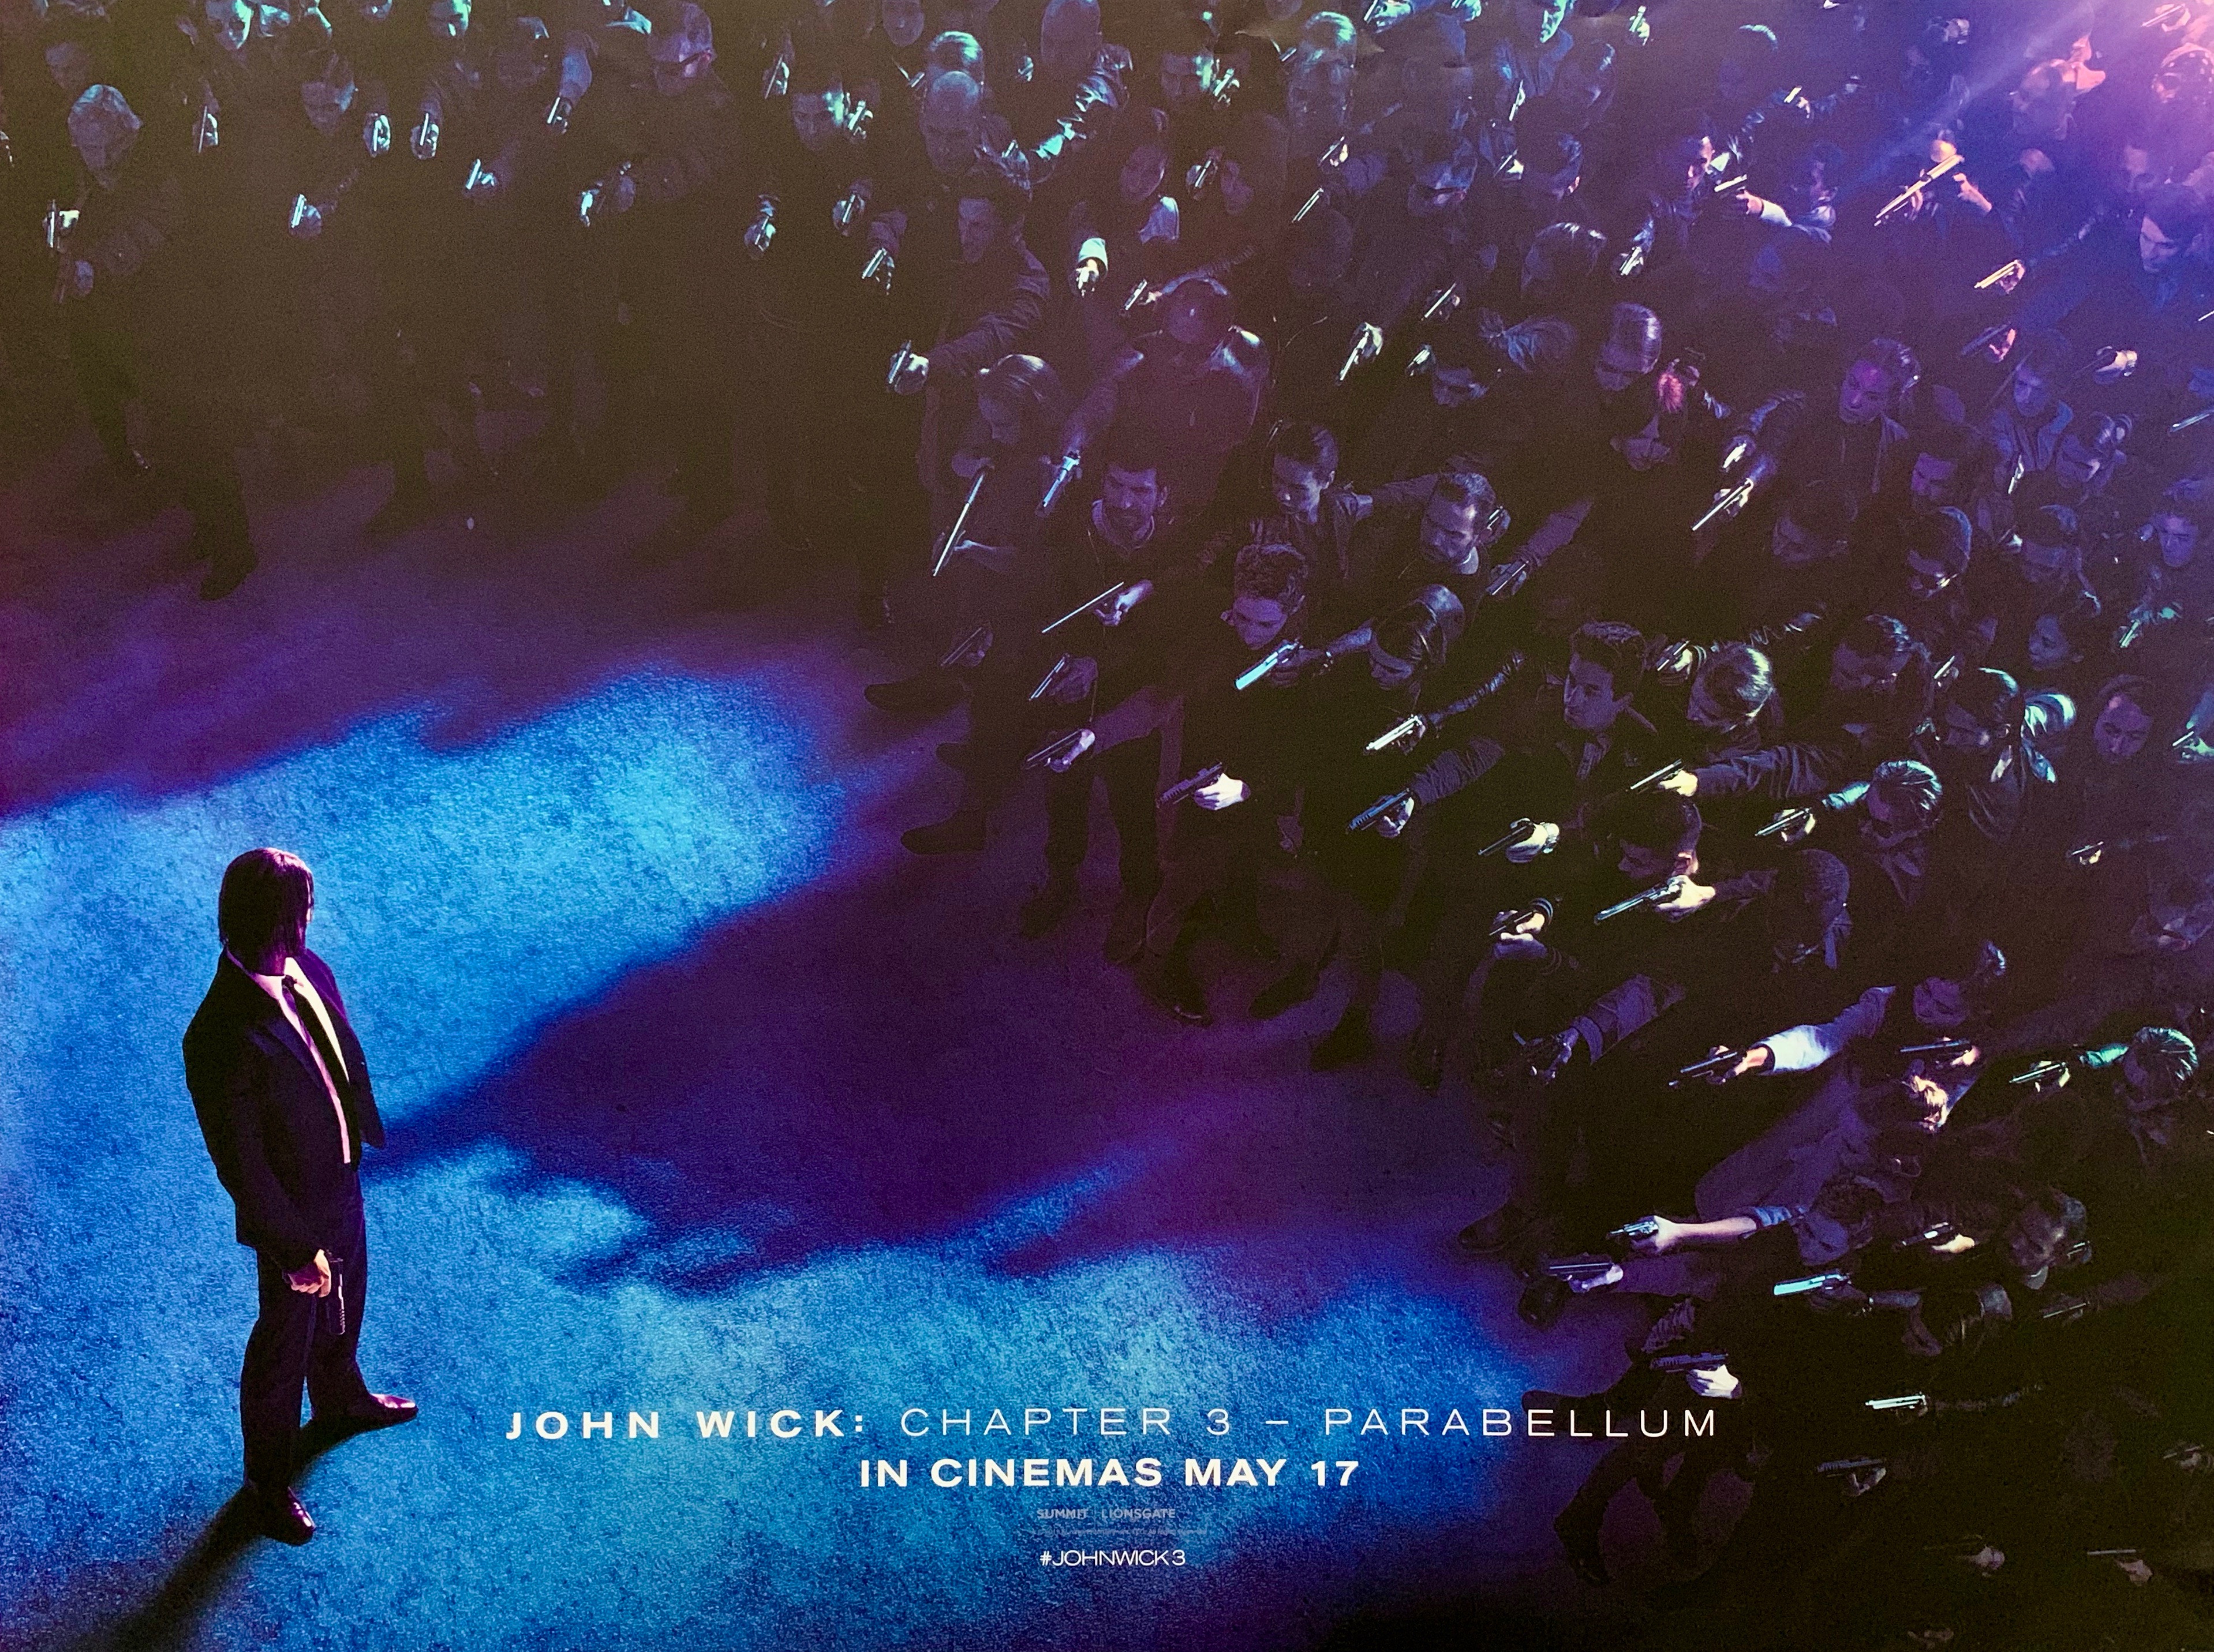 John Wick, French Grande, Movie Posters